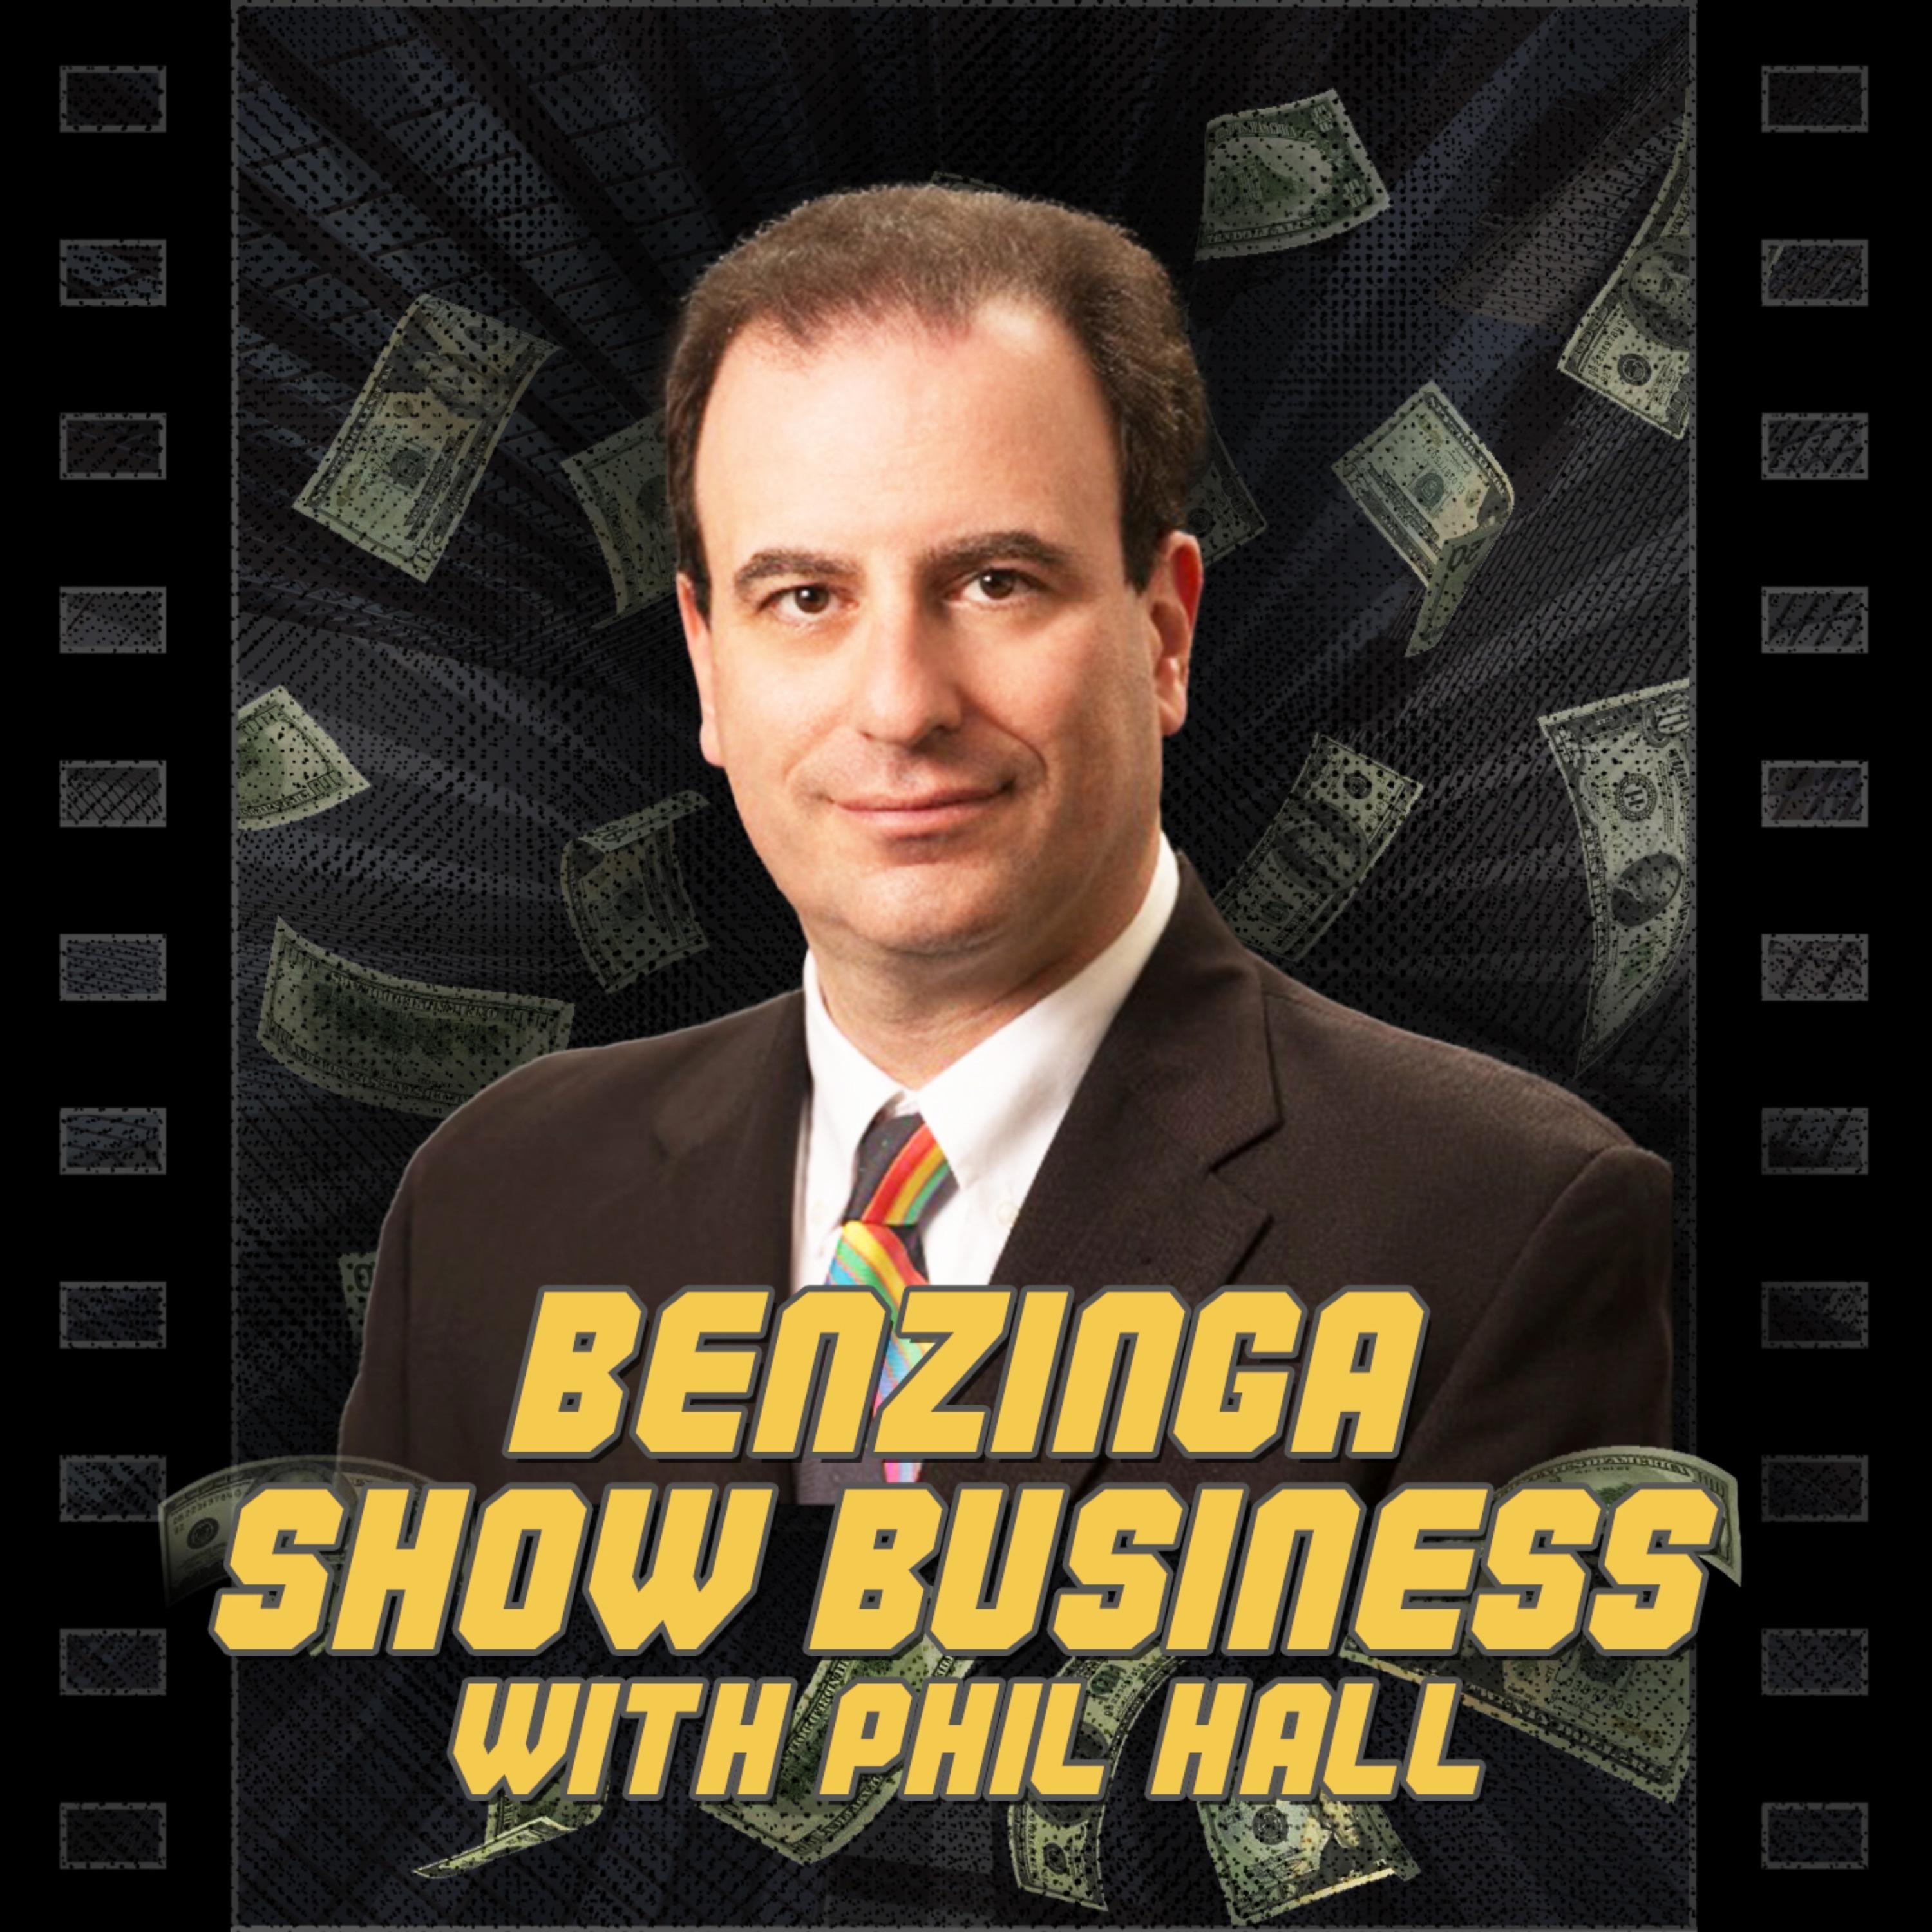 Benzinga Show Business with Phil Hall